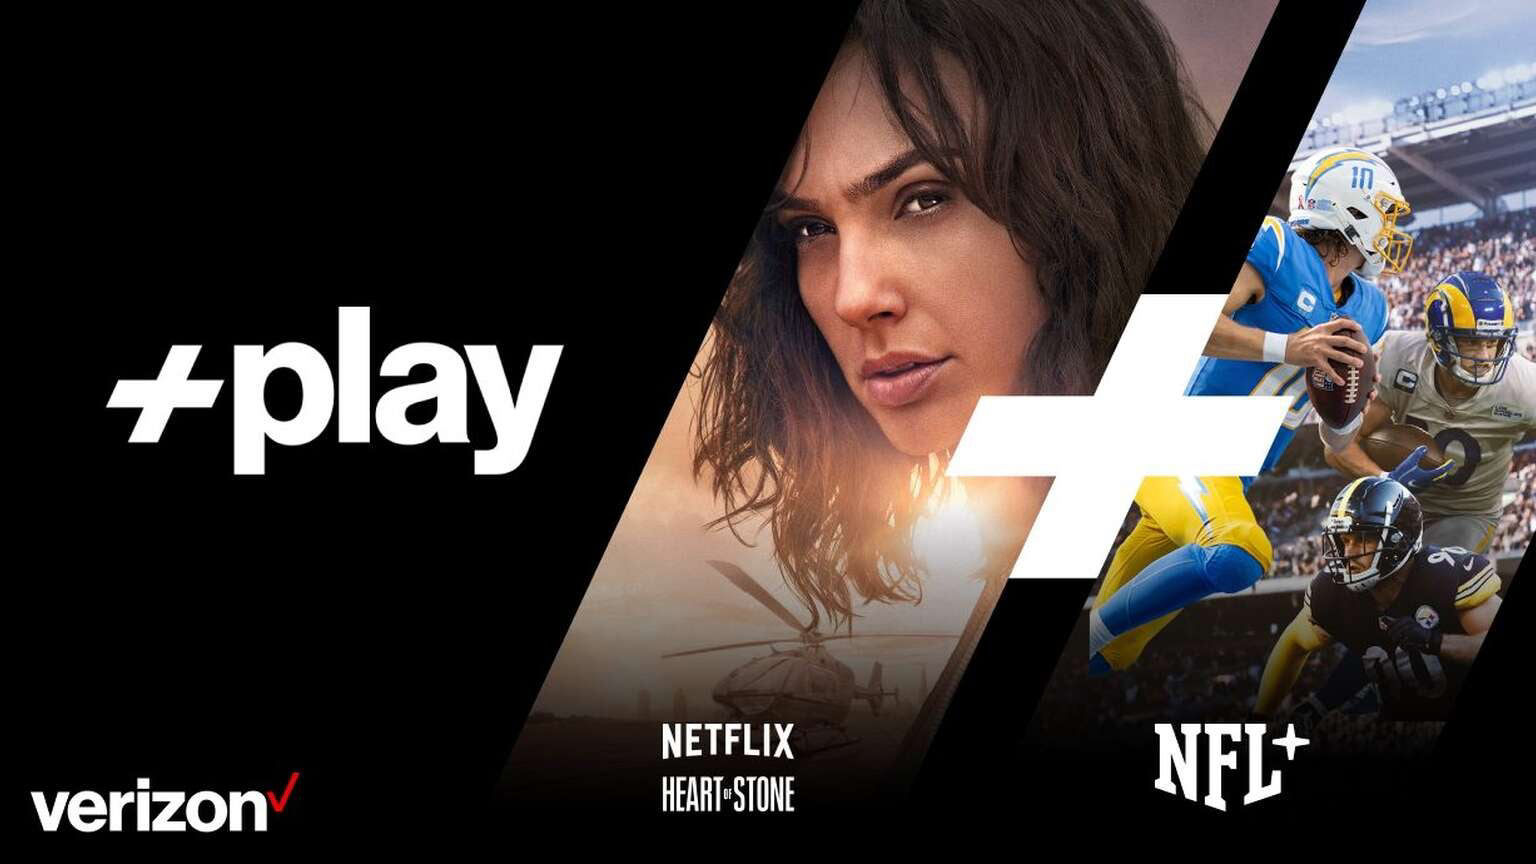 DEAL ALERT Get Netflix Premium, NFL+ Premium Bundle for Just 25 from